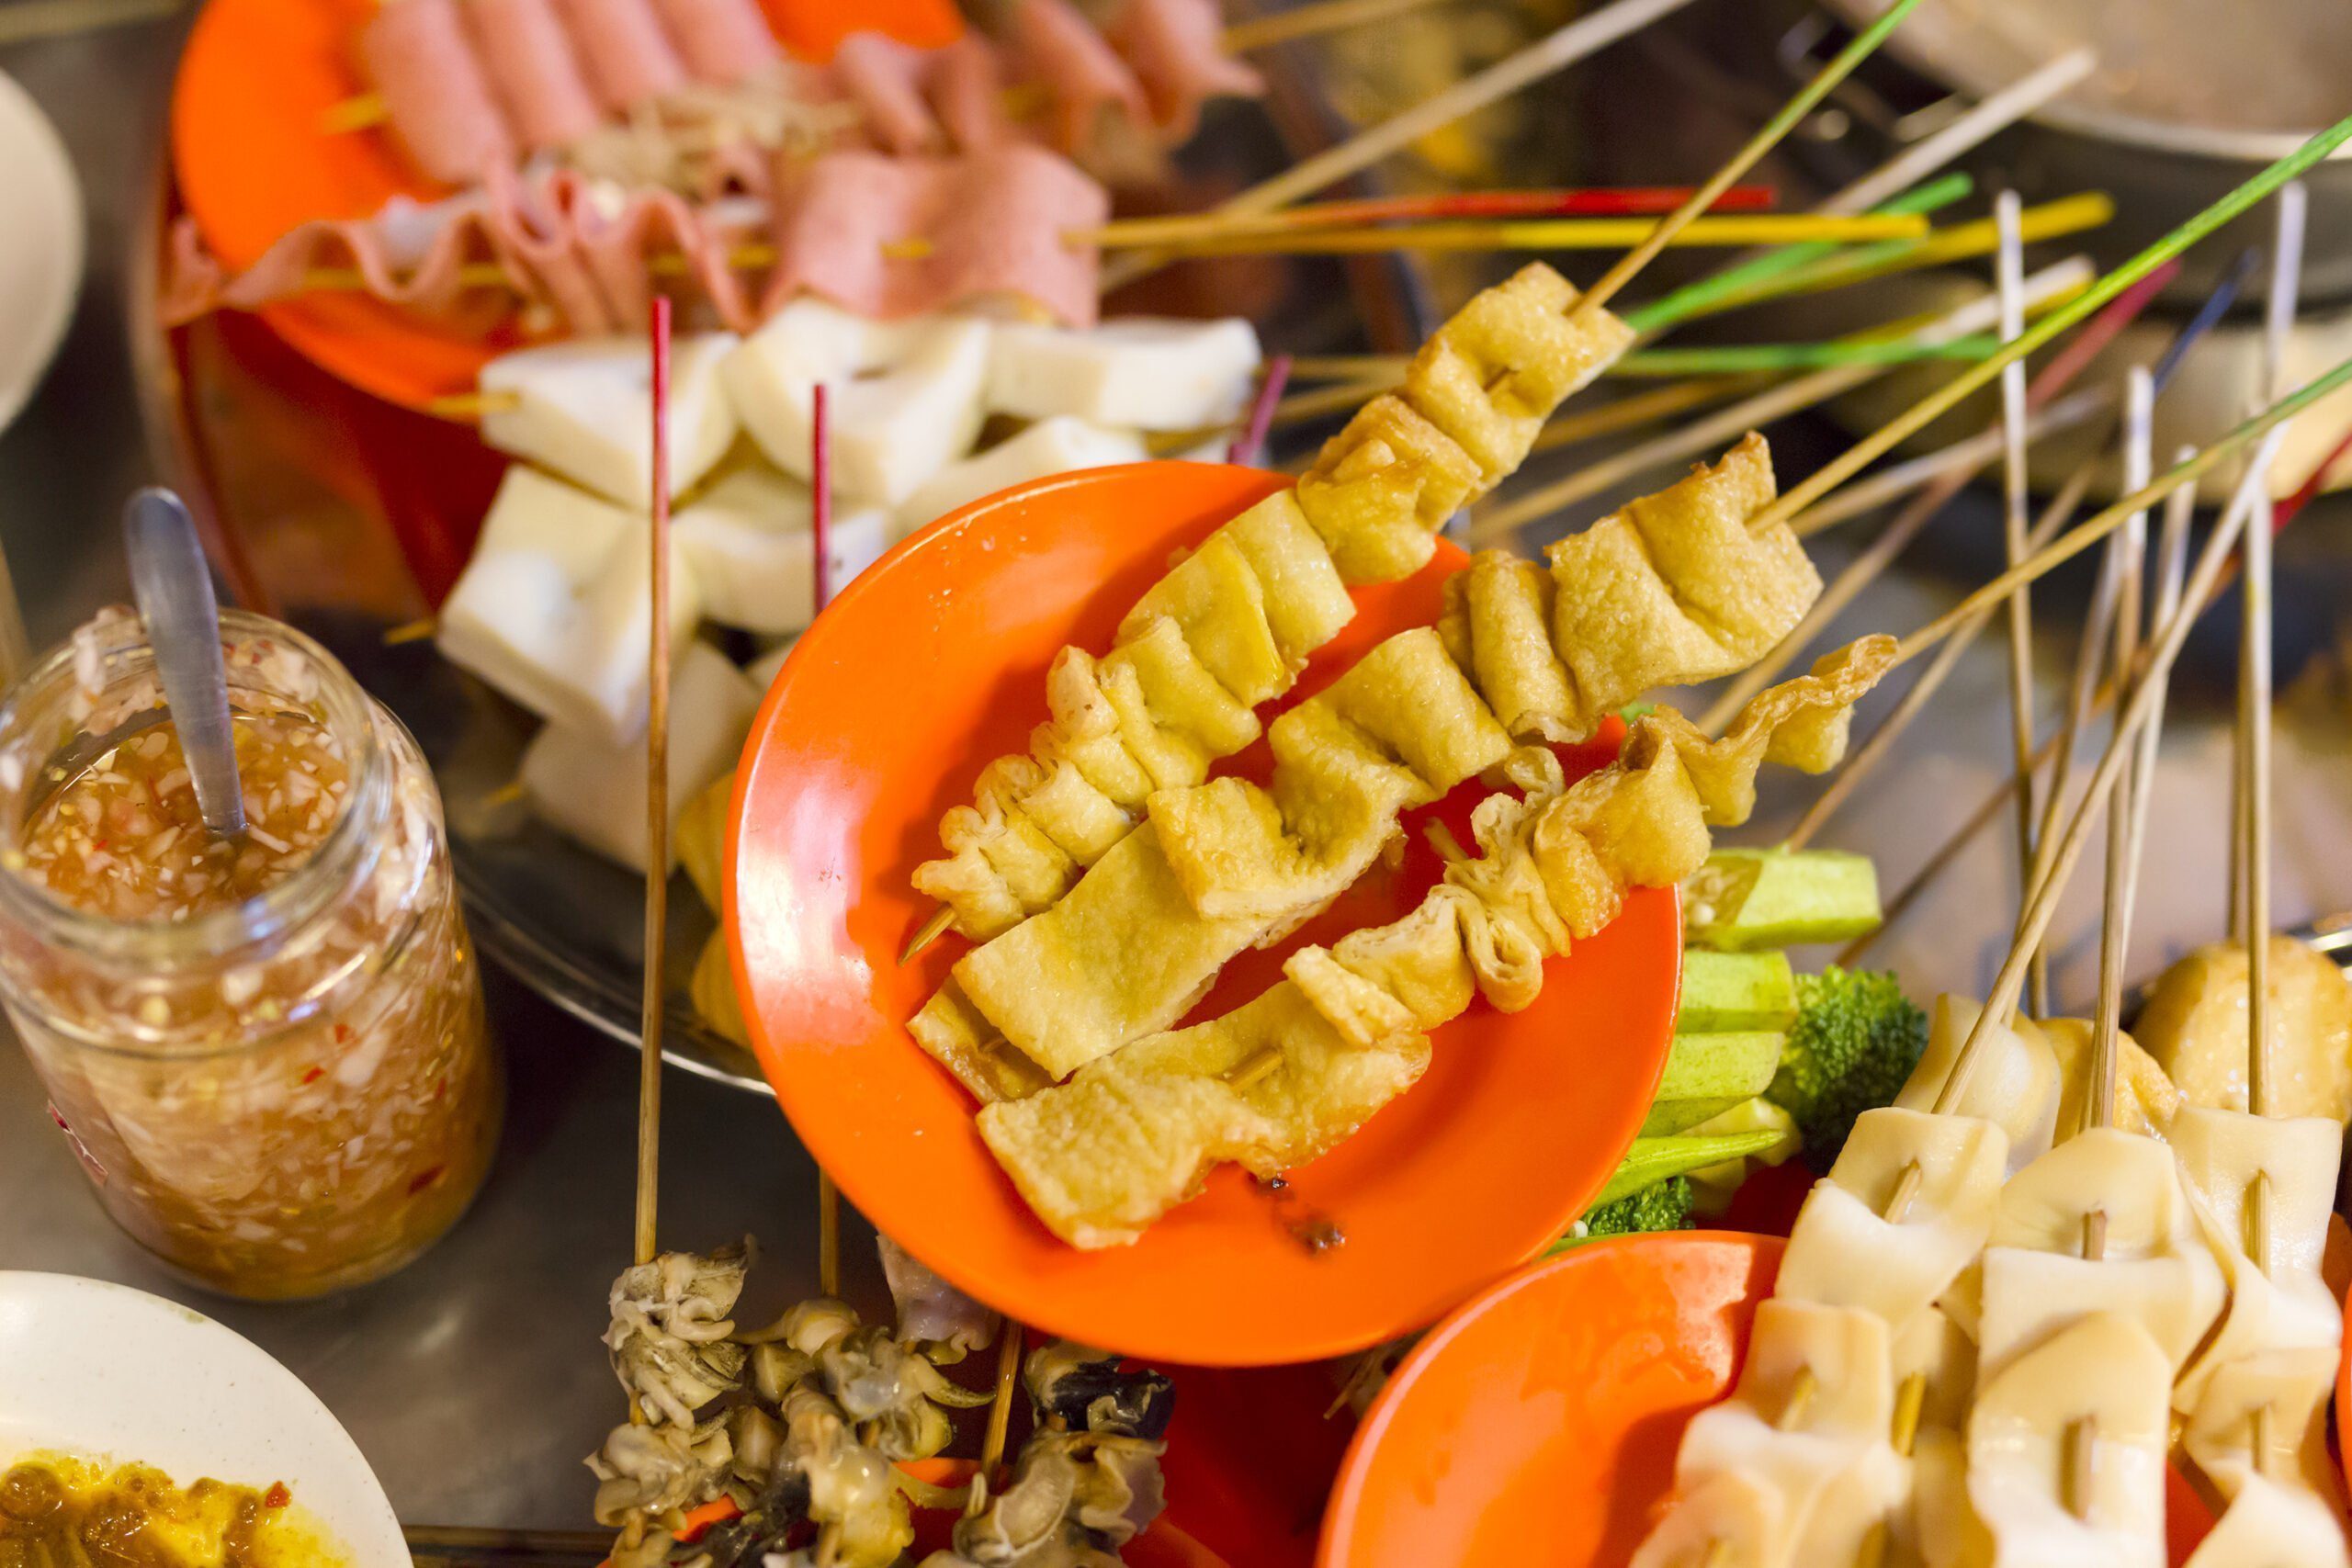 traditional lok lok street food from malaysia 2022 12 16 09 50 51 utc scaled